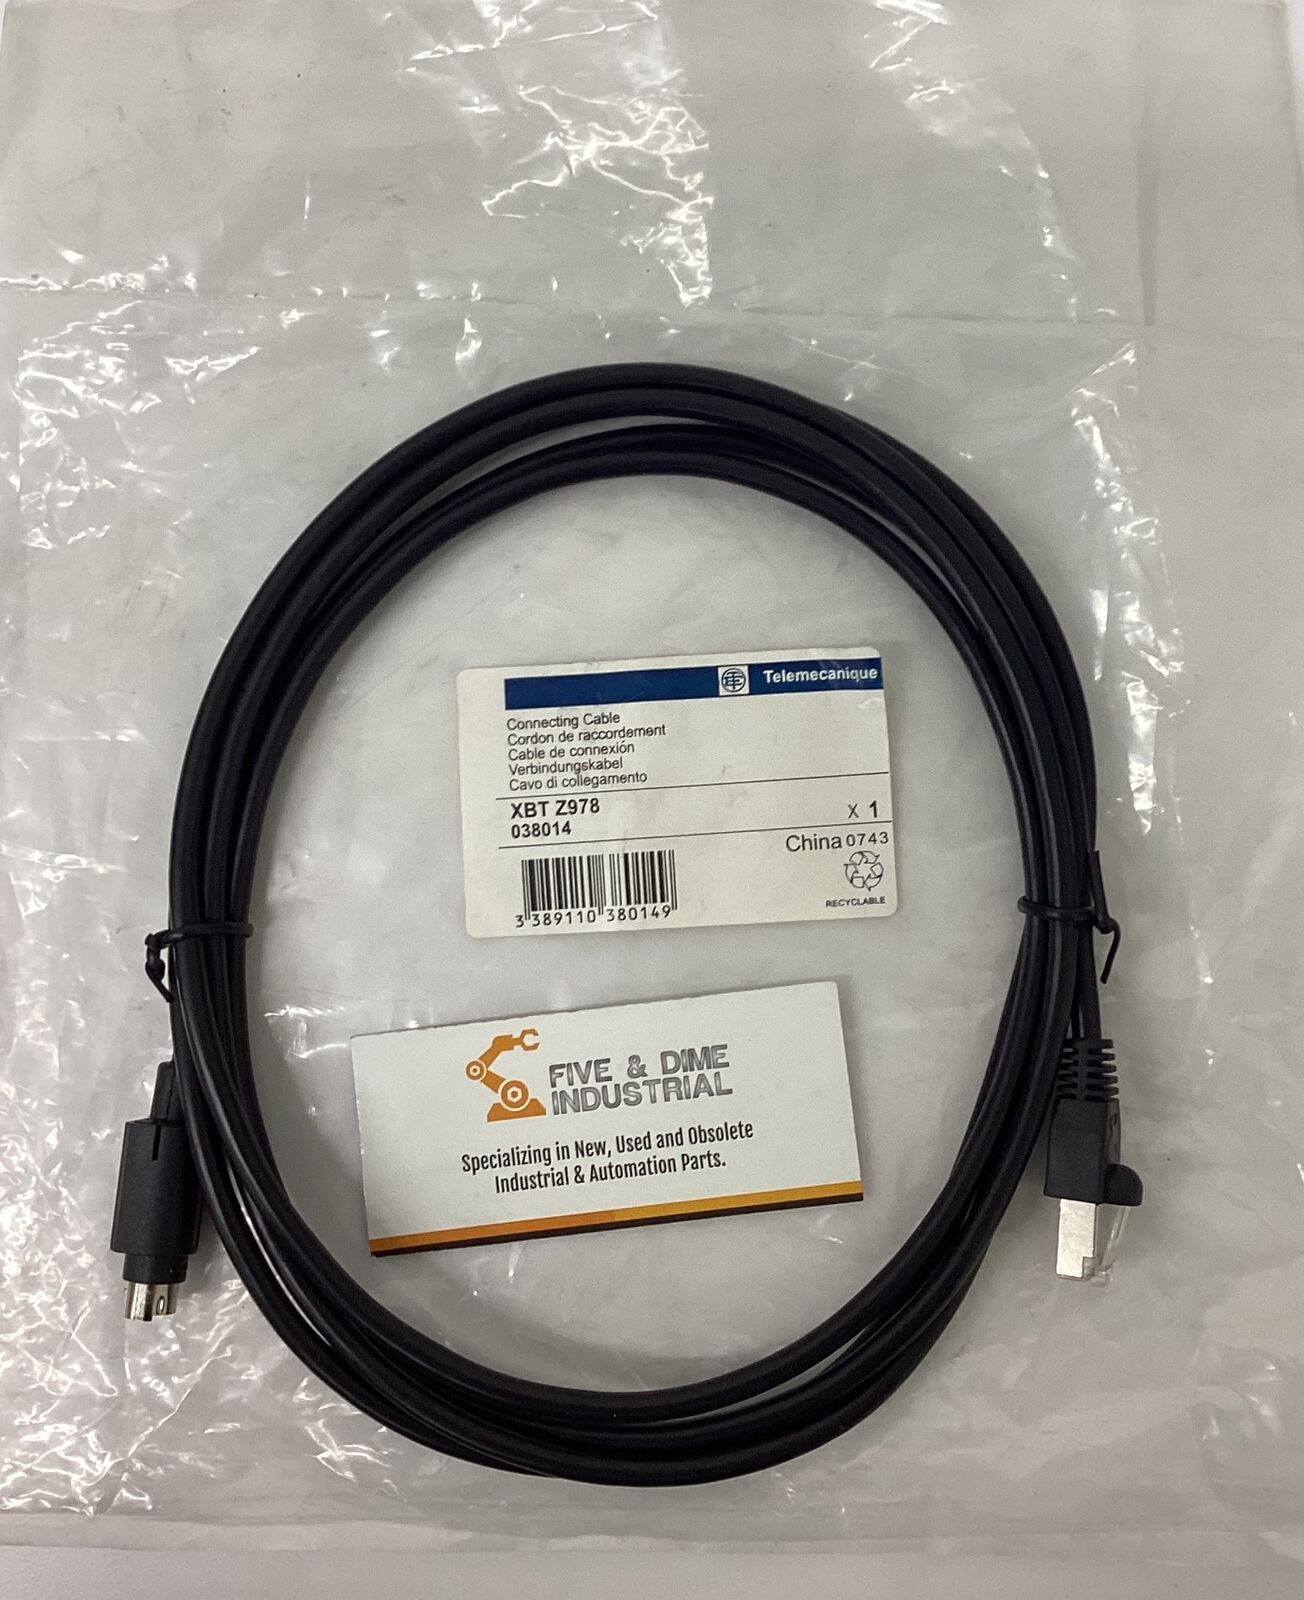 Telemecanique XBT-Z978 Connecting Cable 2.5 meter (CL120)